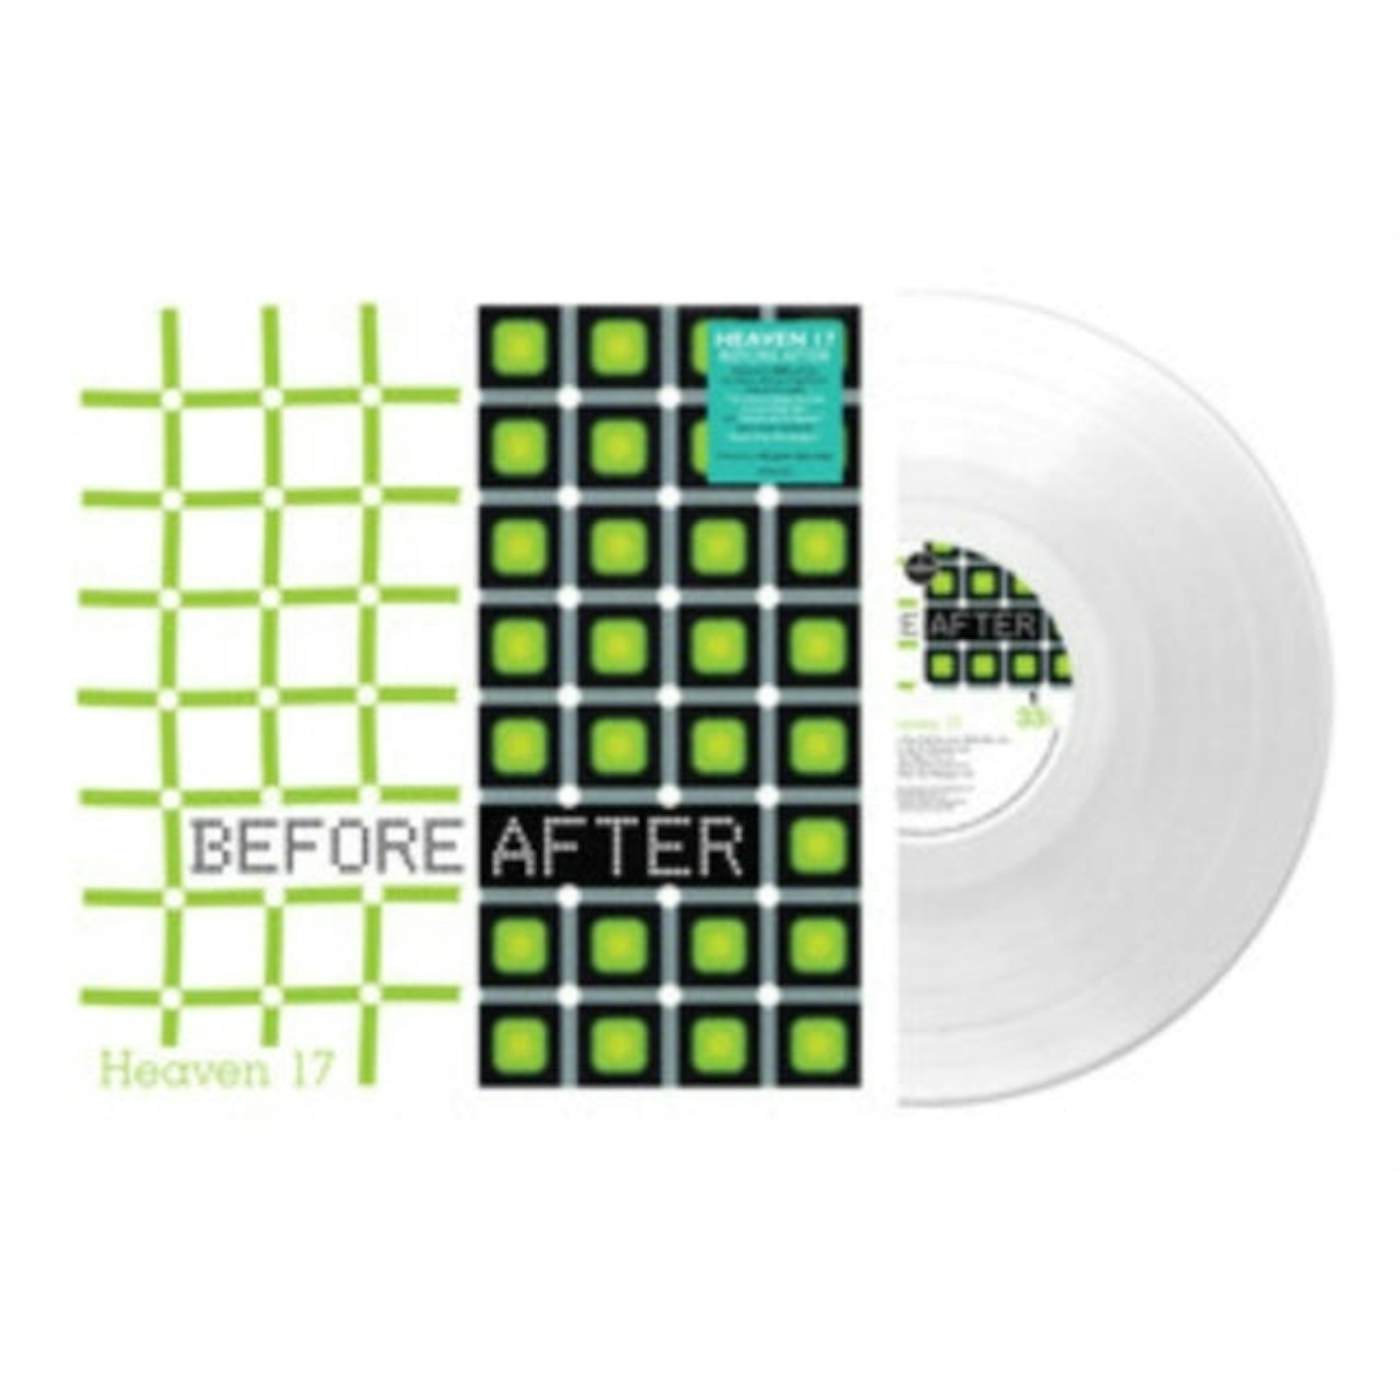 Heaven 17  LP Vinyl Record - Before After (Clear Vinyl)